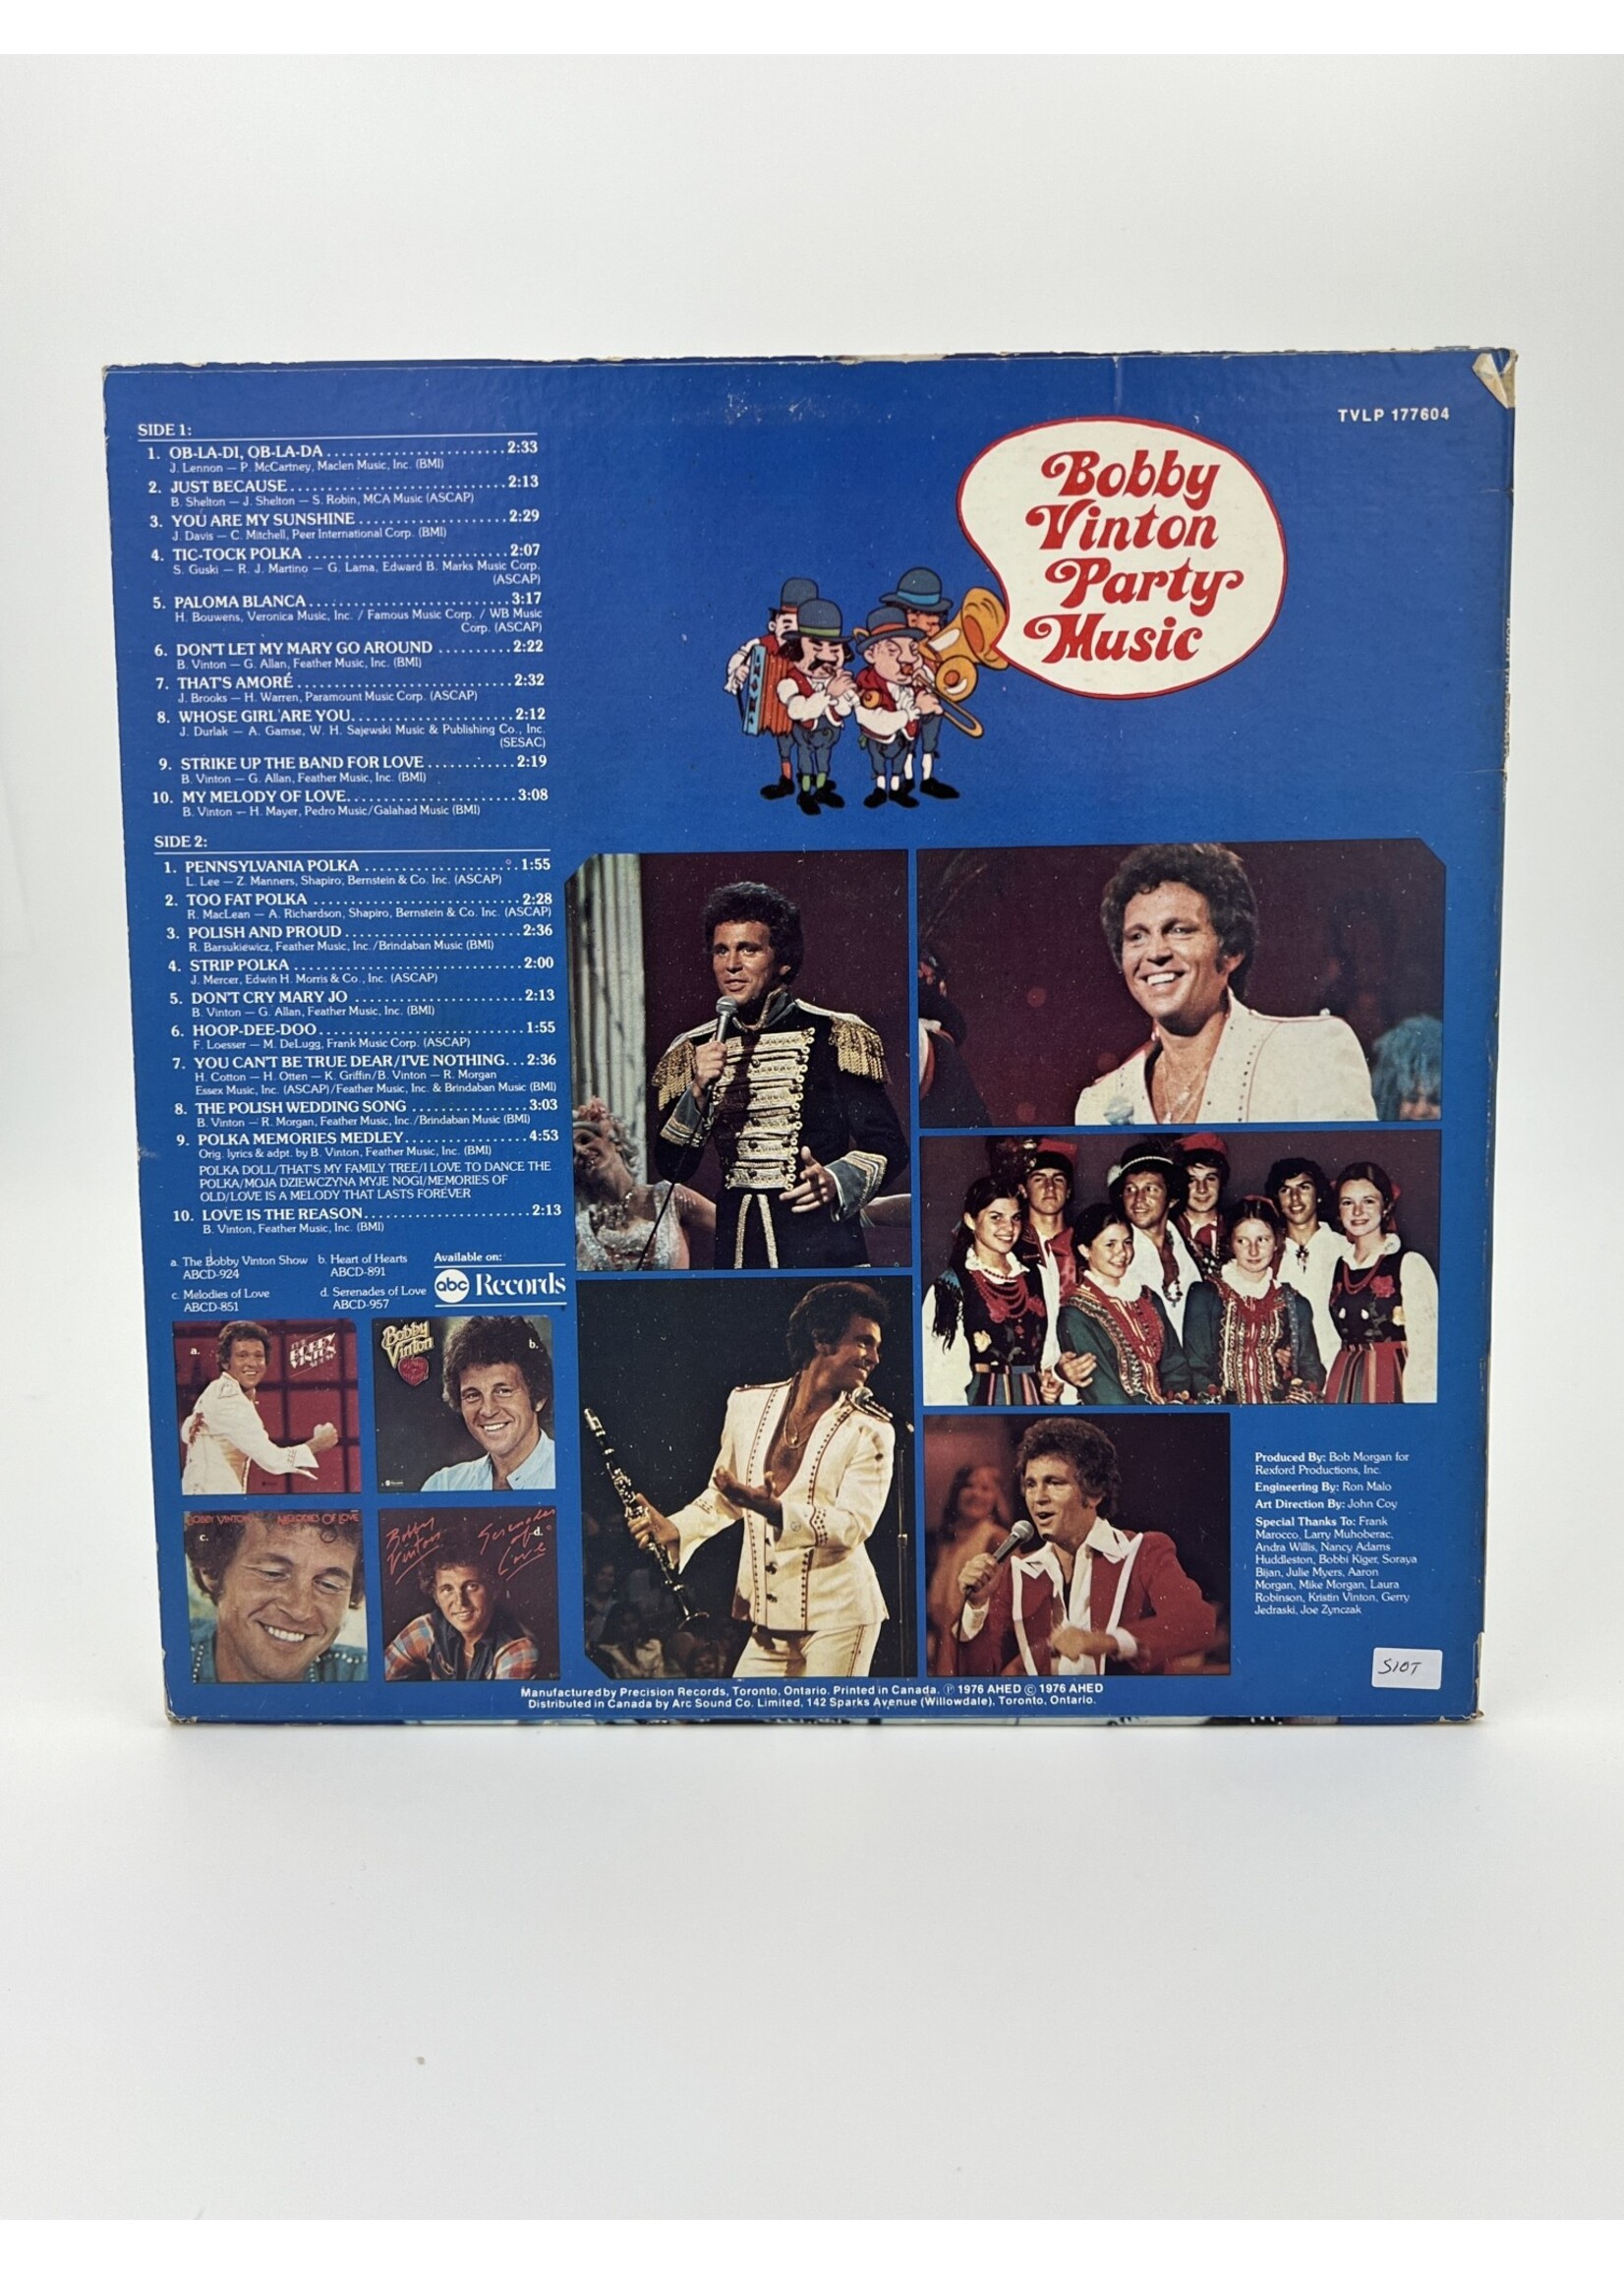 LP   Bobby Vinton Party Music 20 Hits LP Record